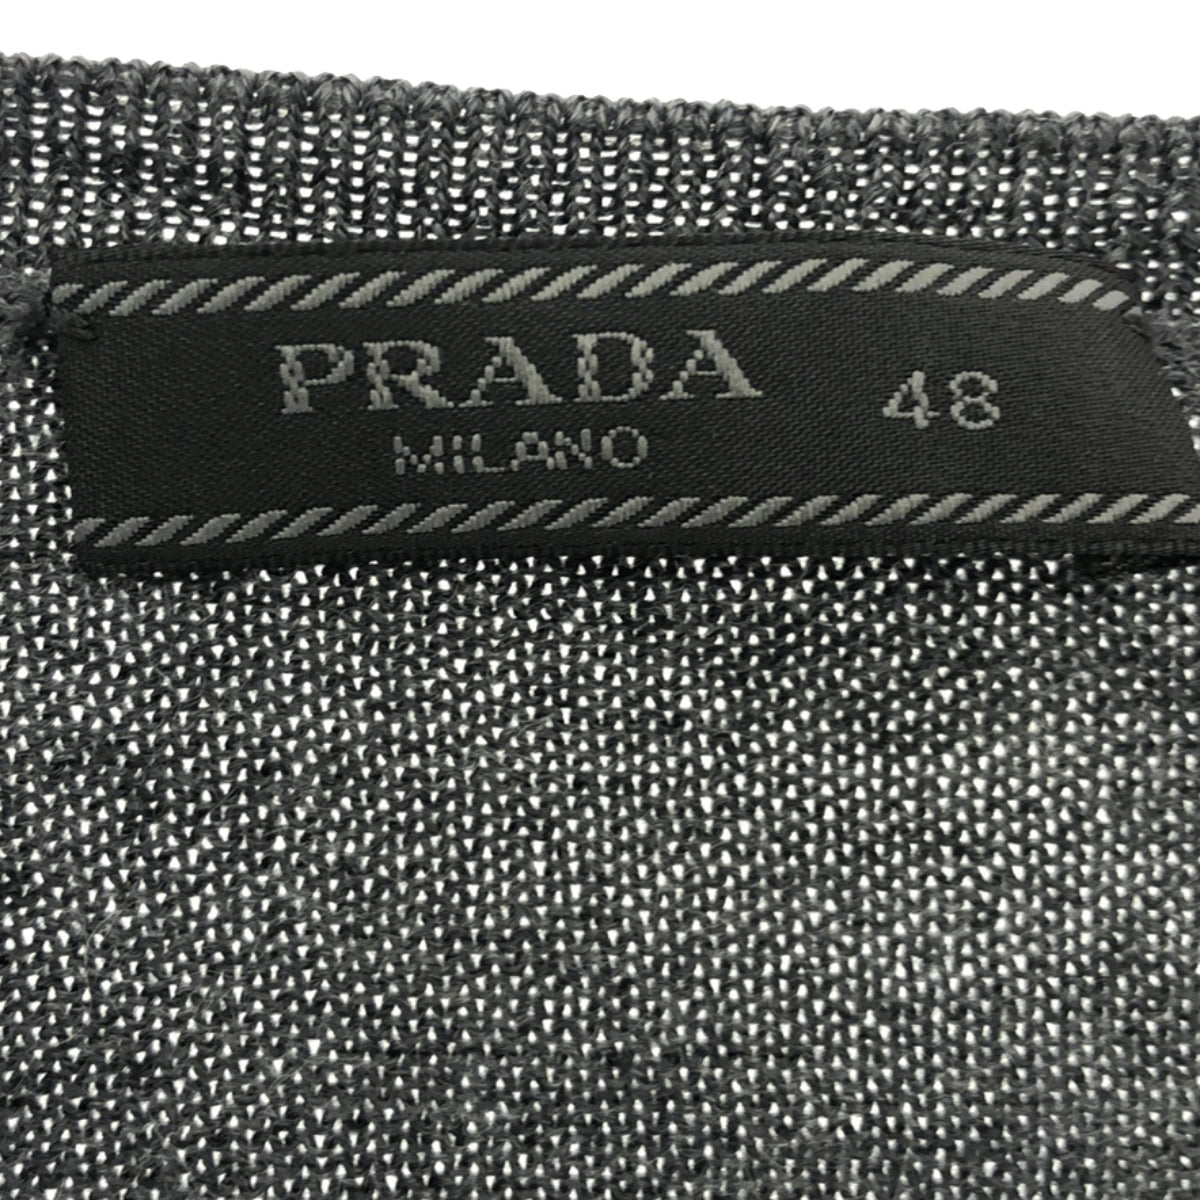 PRADA / プラダ | ウール ハイゲージ Vネック ニットセーター | 48 | メンズ